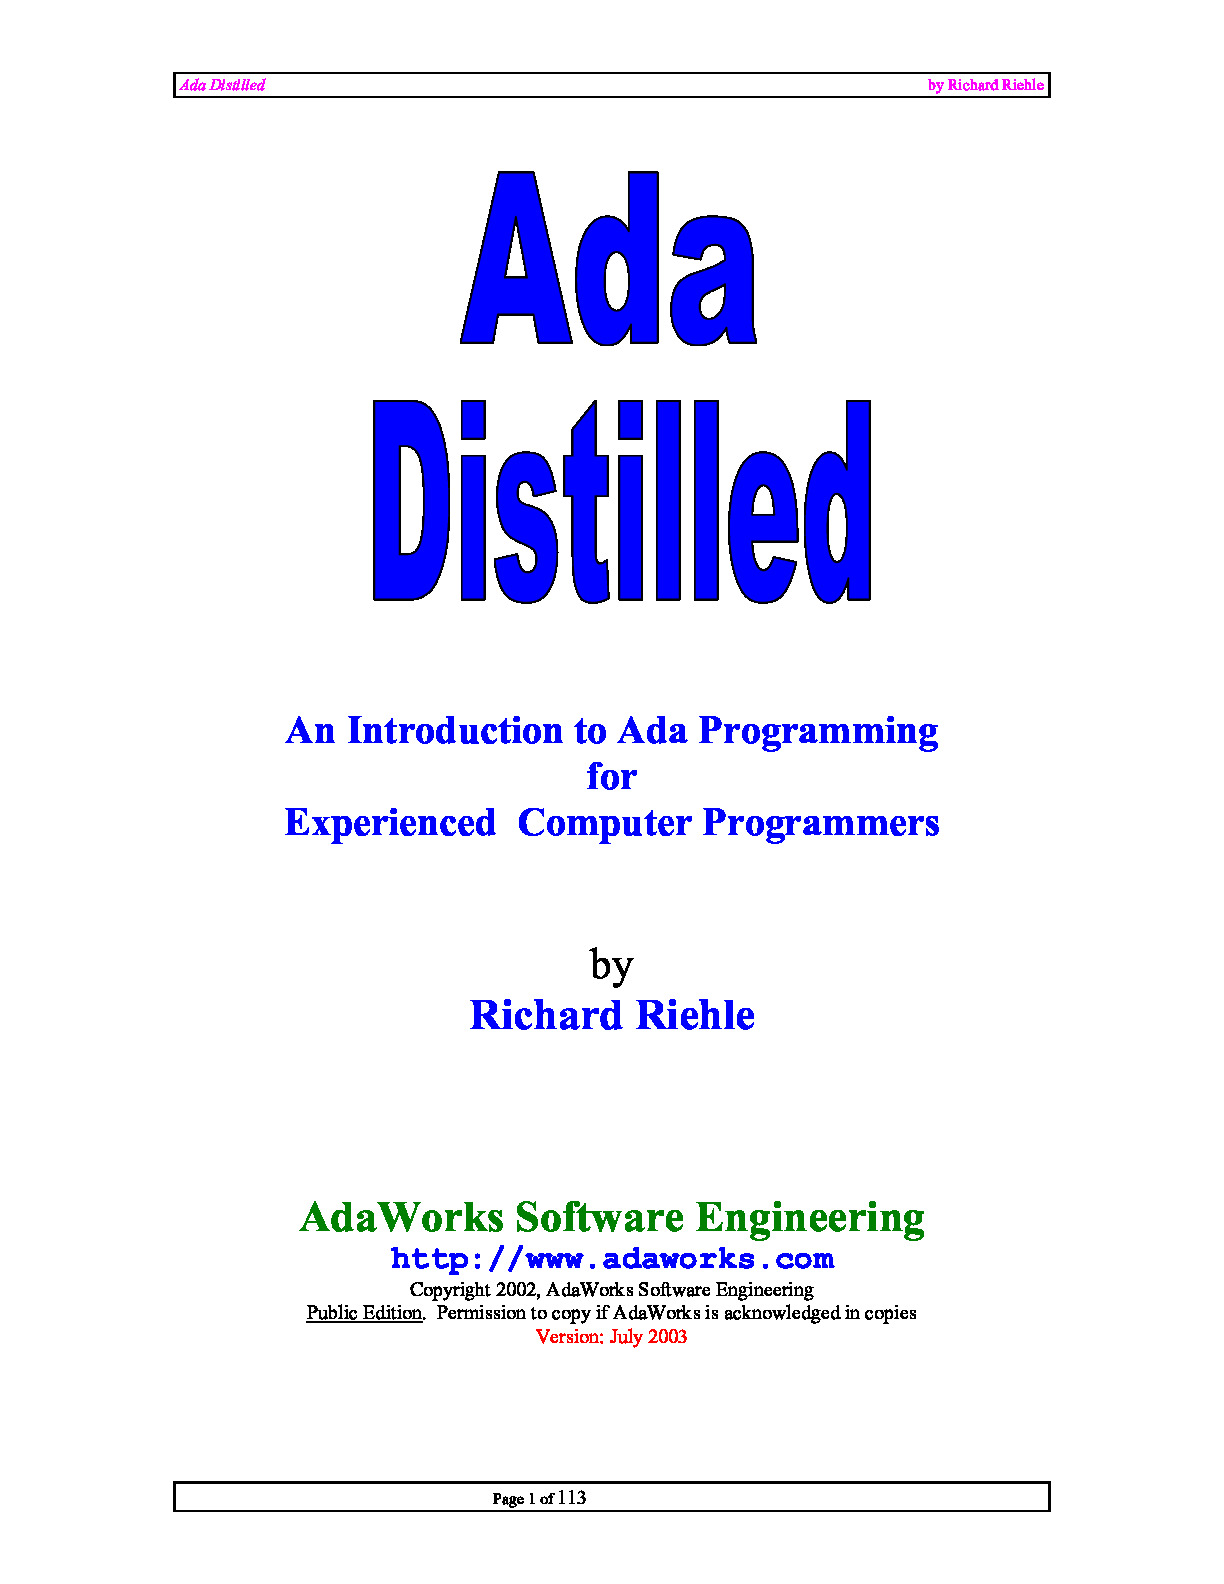 AdaDistilled07-27-2003